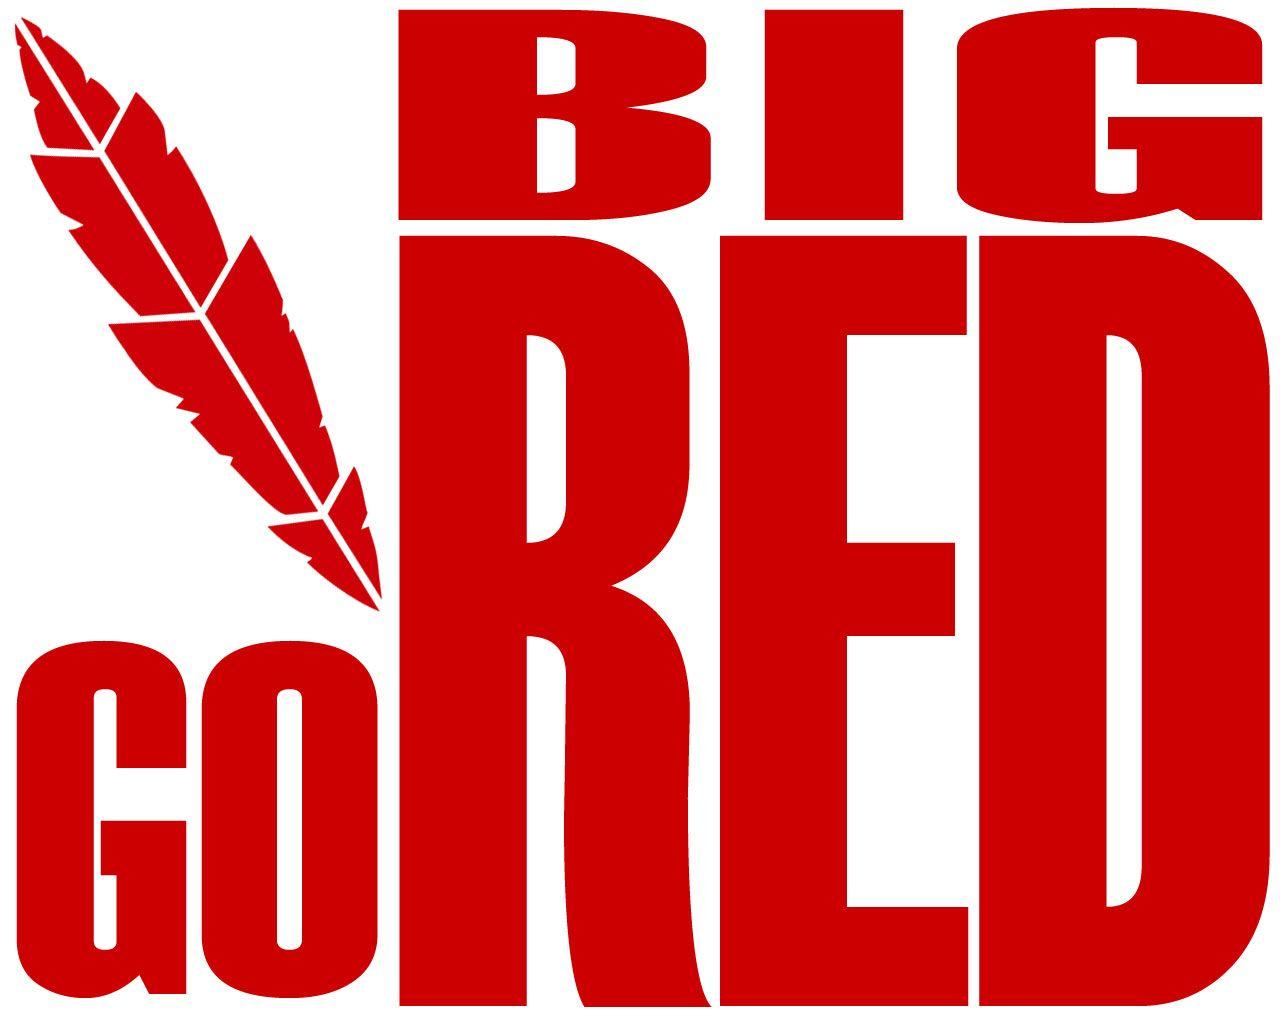 Go Big Red Logo - Media School District